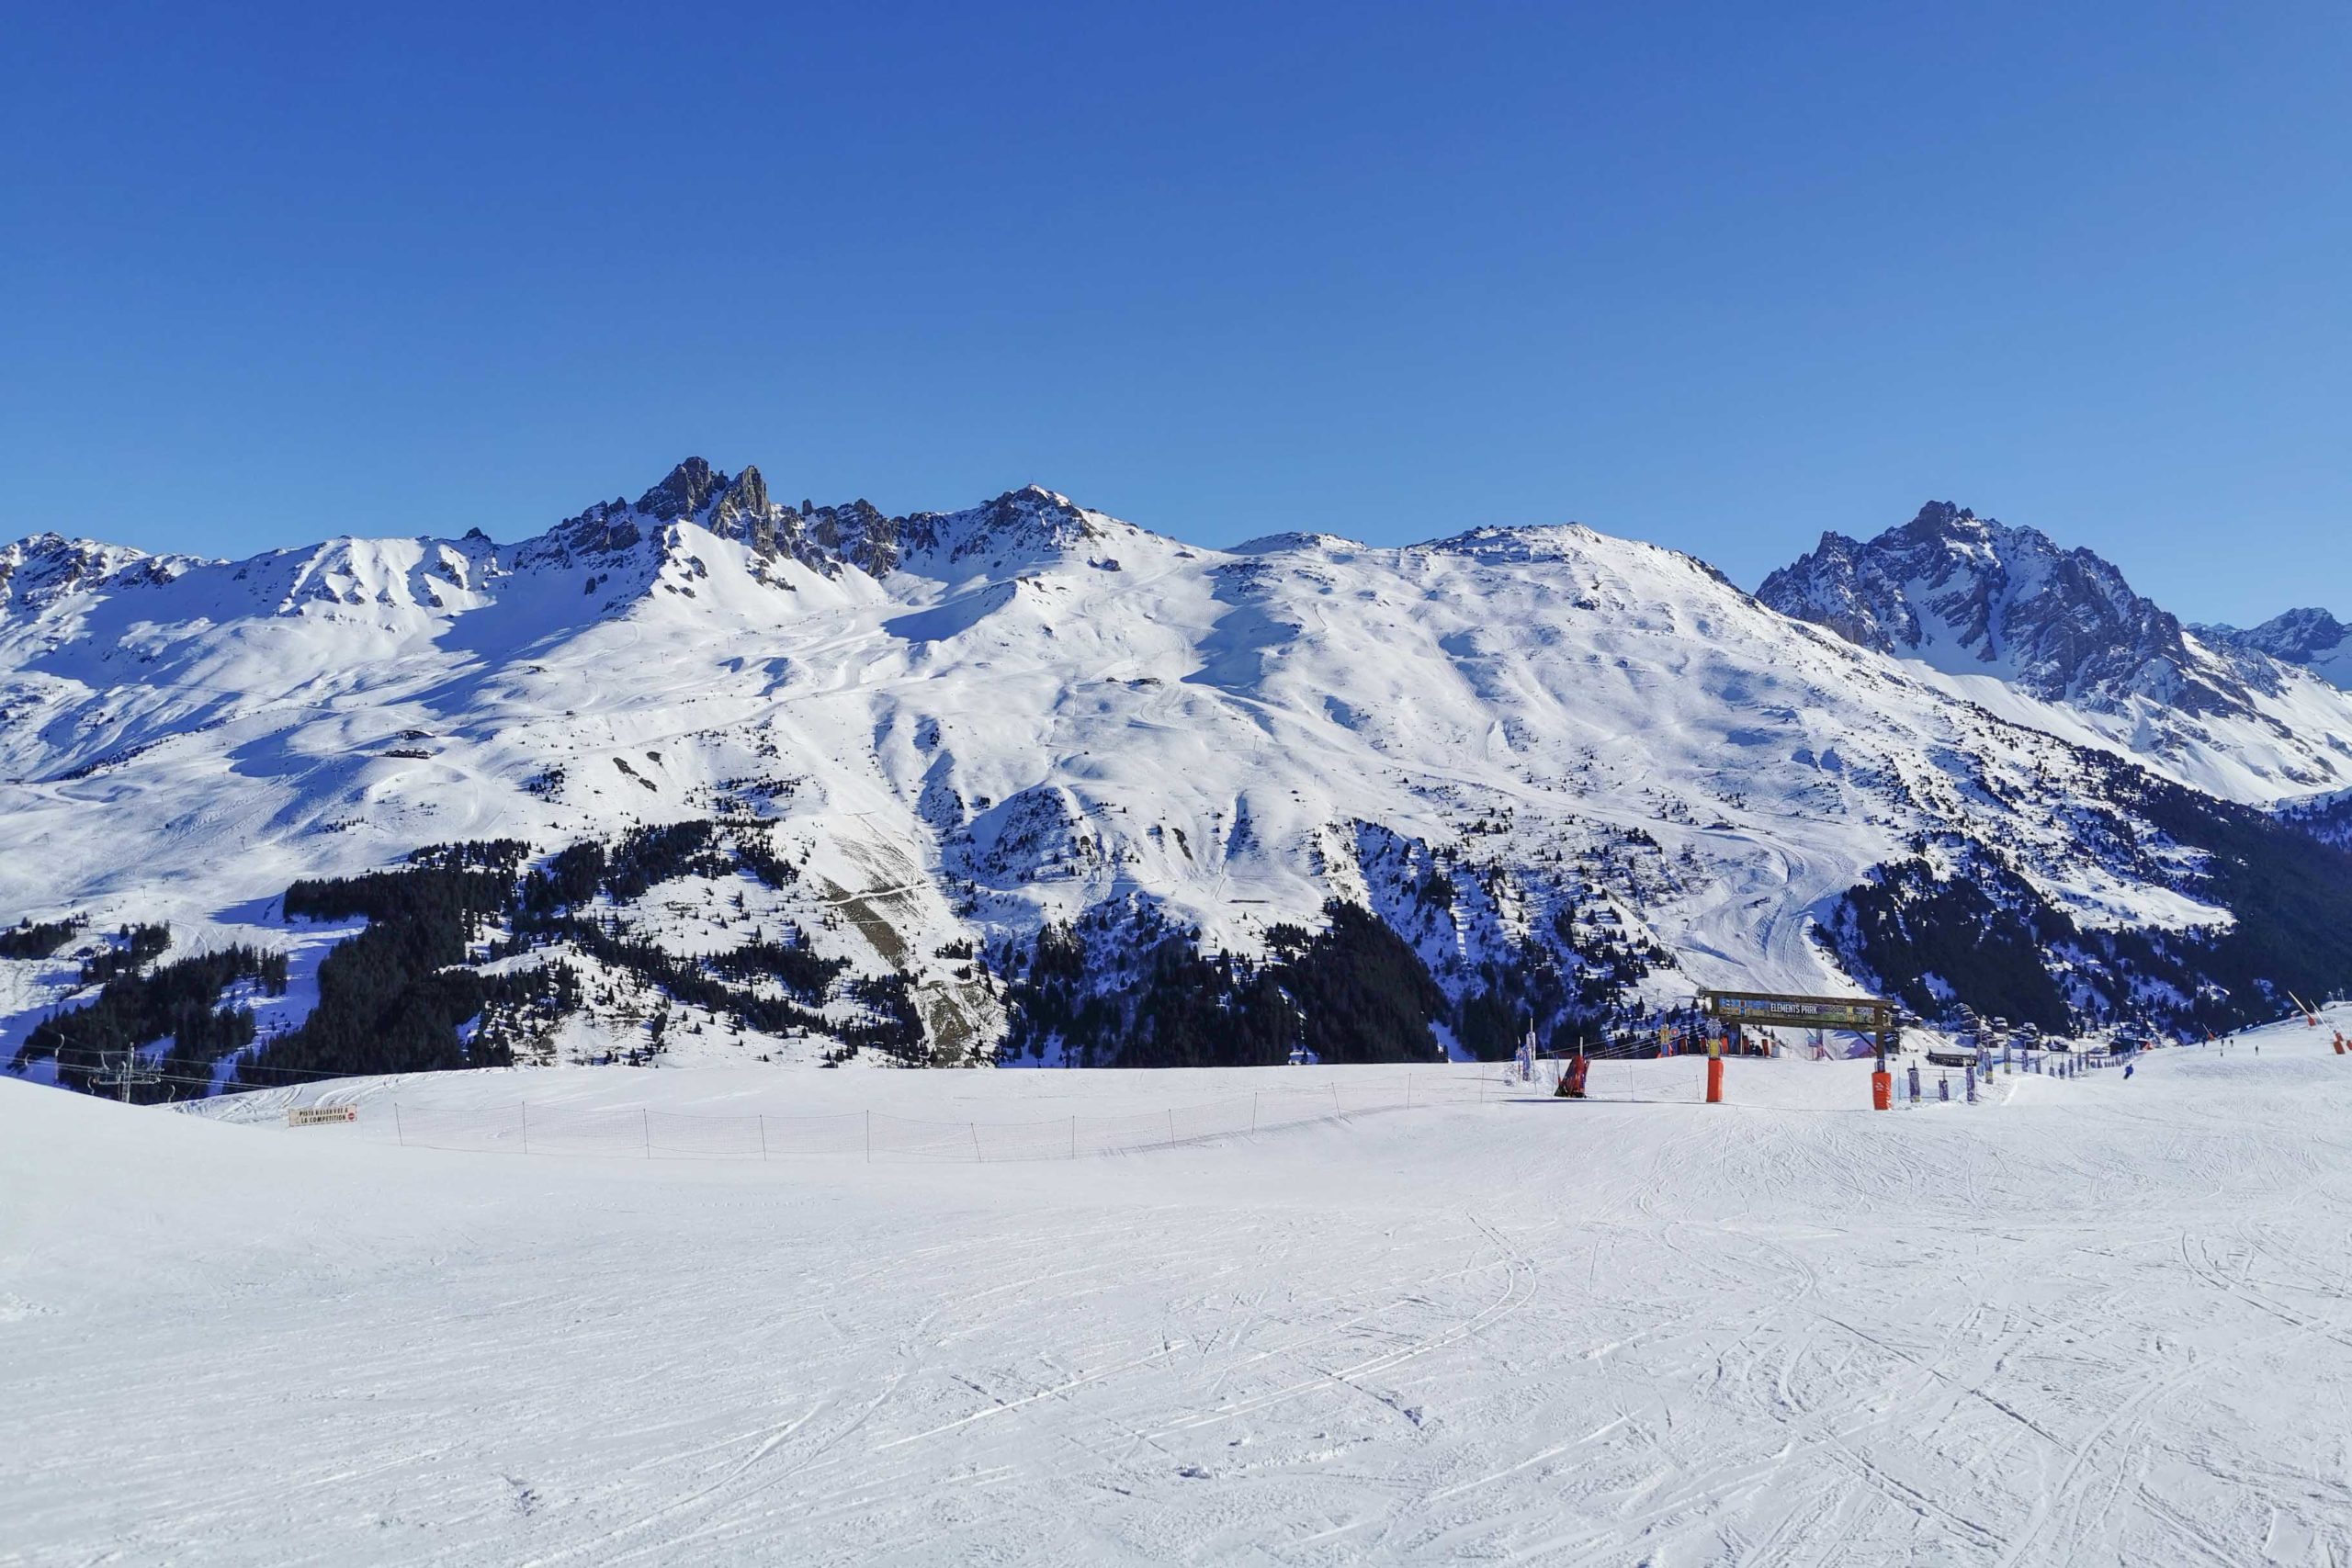 Ski Holidays in France - Courchevel. Photo by Ksundria via Envato Elements